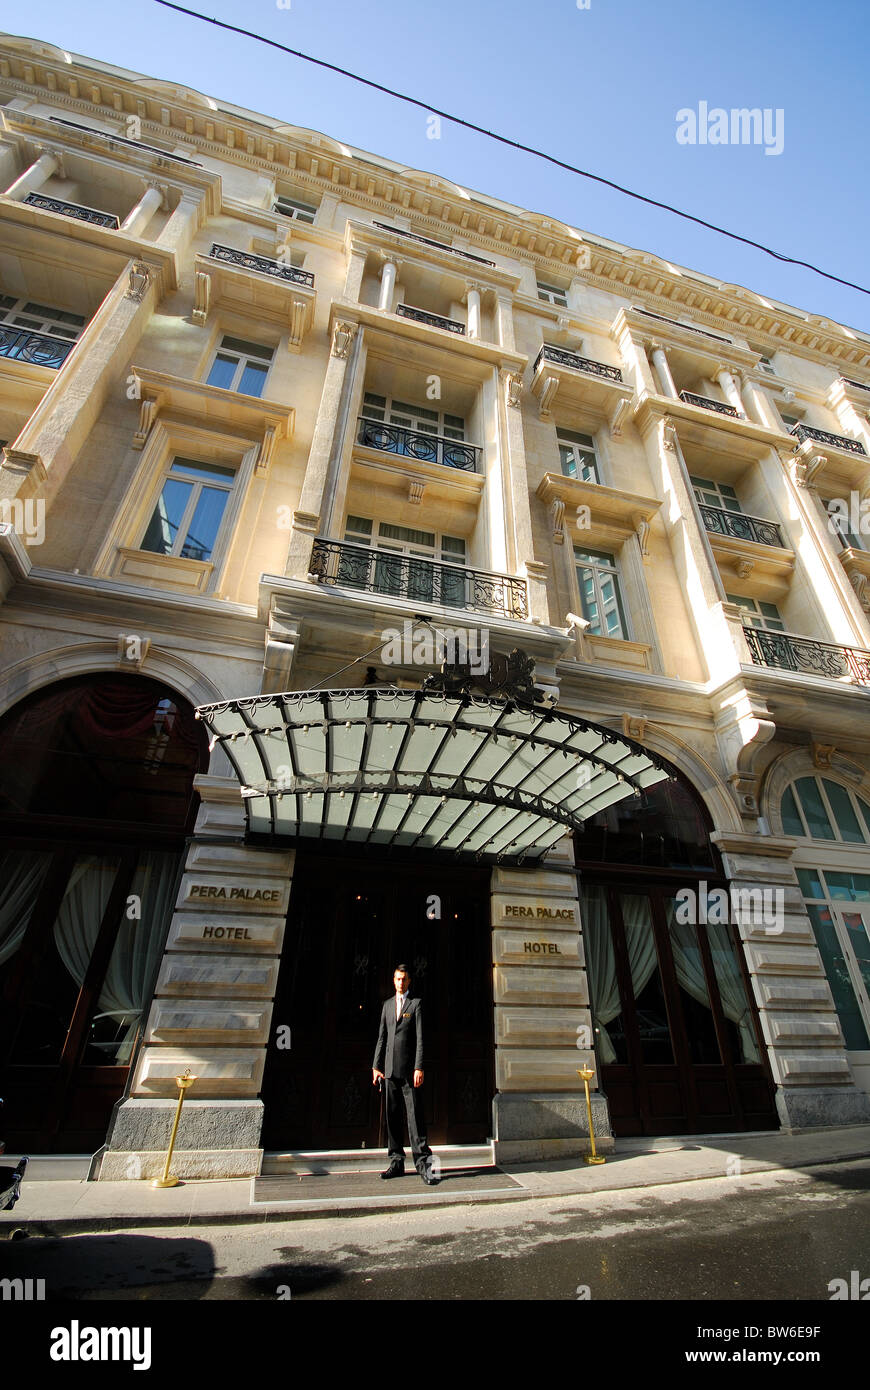 ISTANBUL, TURKEY. The Pera Palas Hotel on Mesrutiyet Caddesi in the Beyoglu district of the city. 2010. Stock Photo